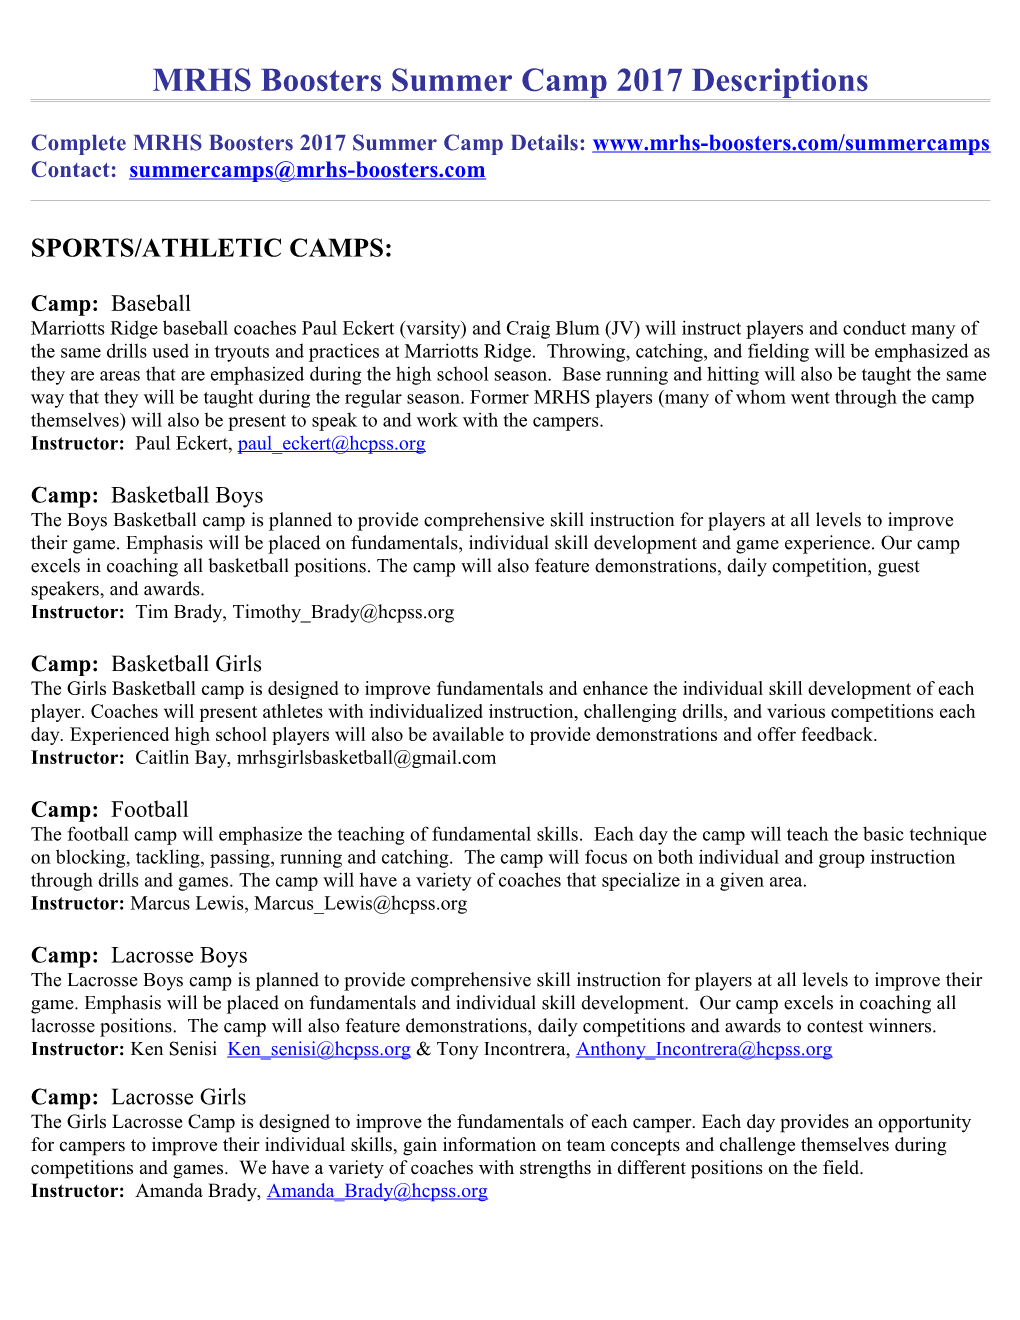 MRHS Boosters Summer Camp Descriptions